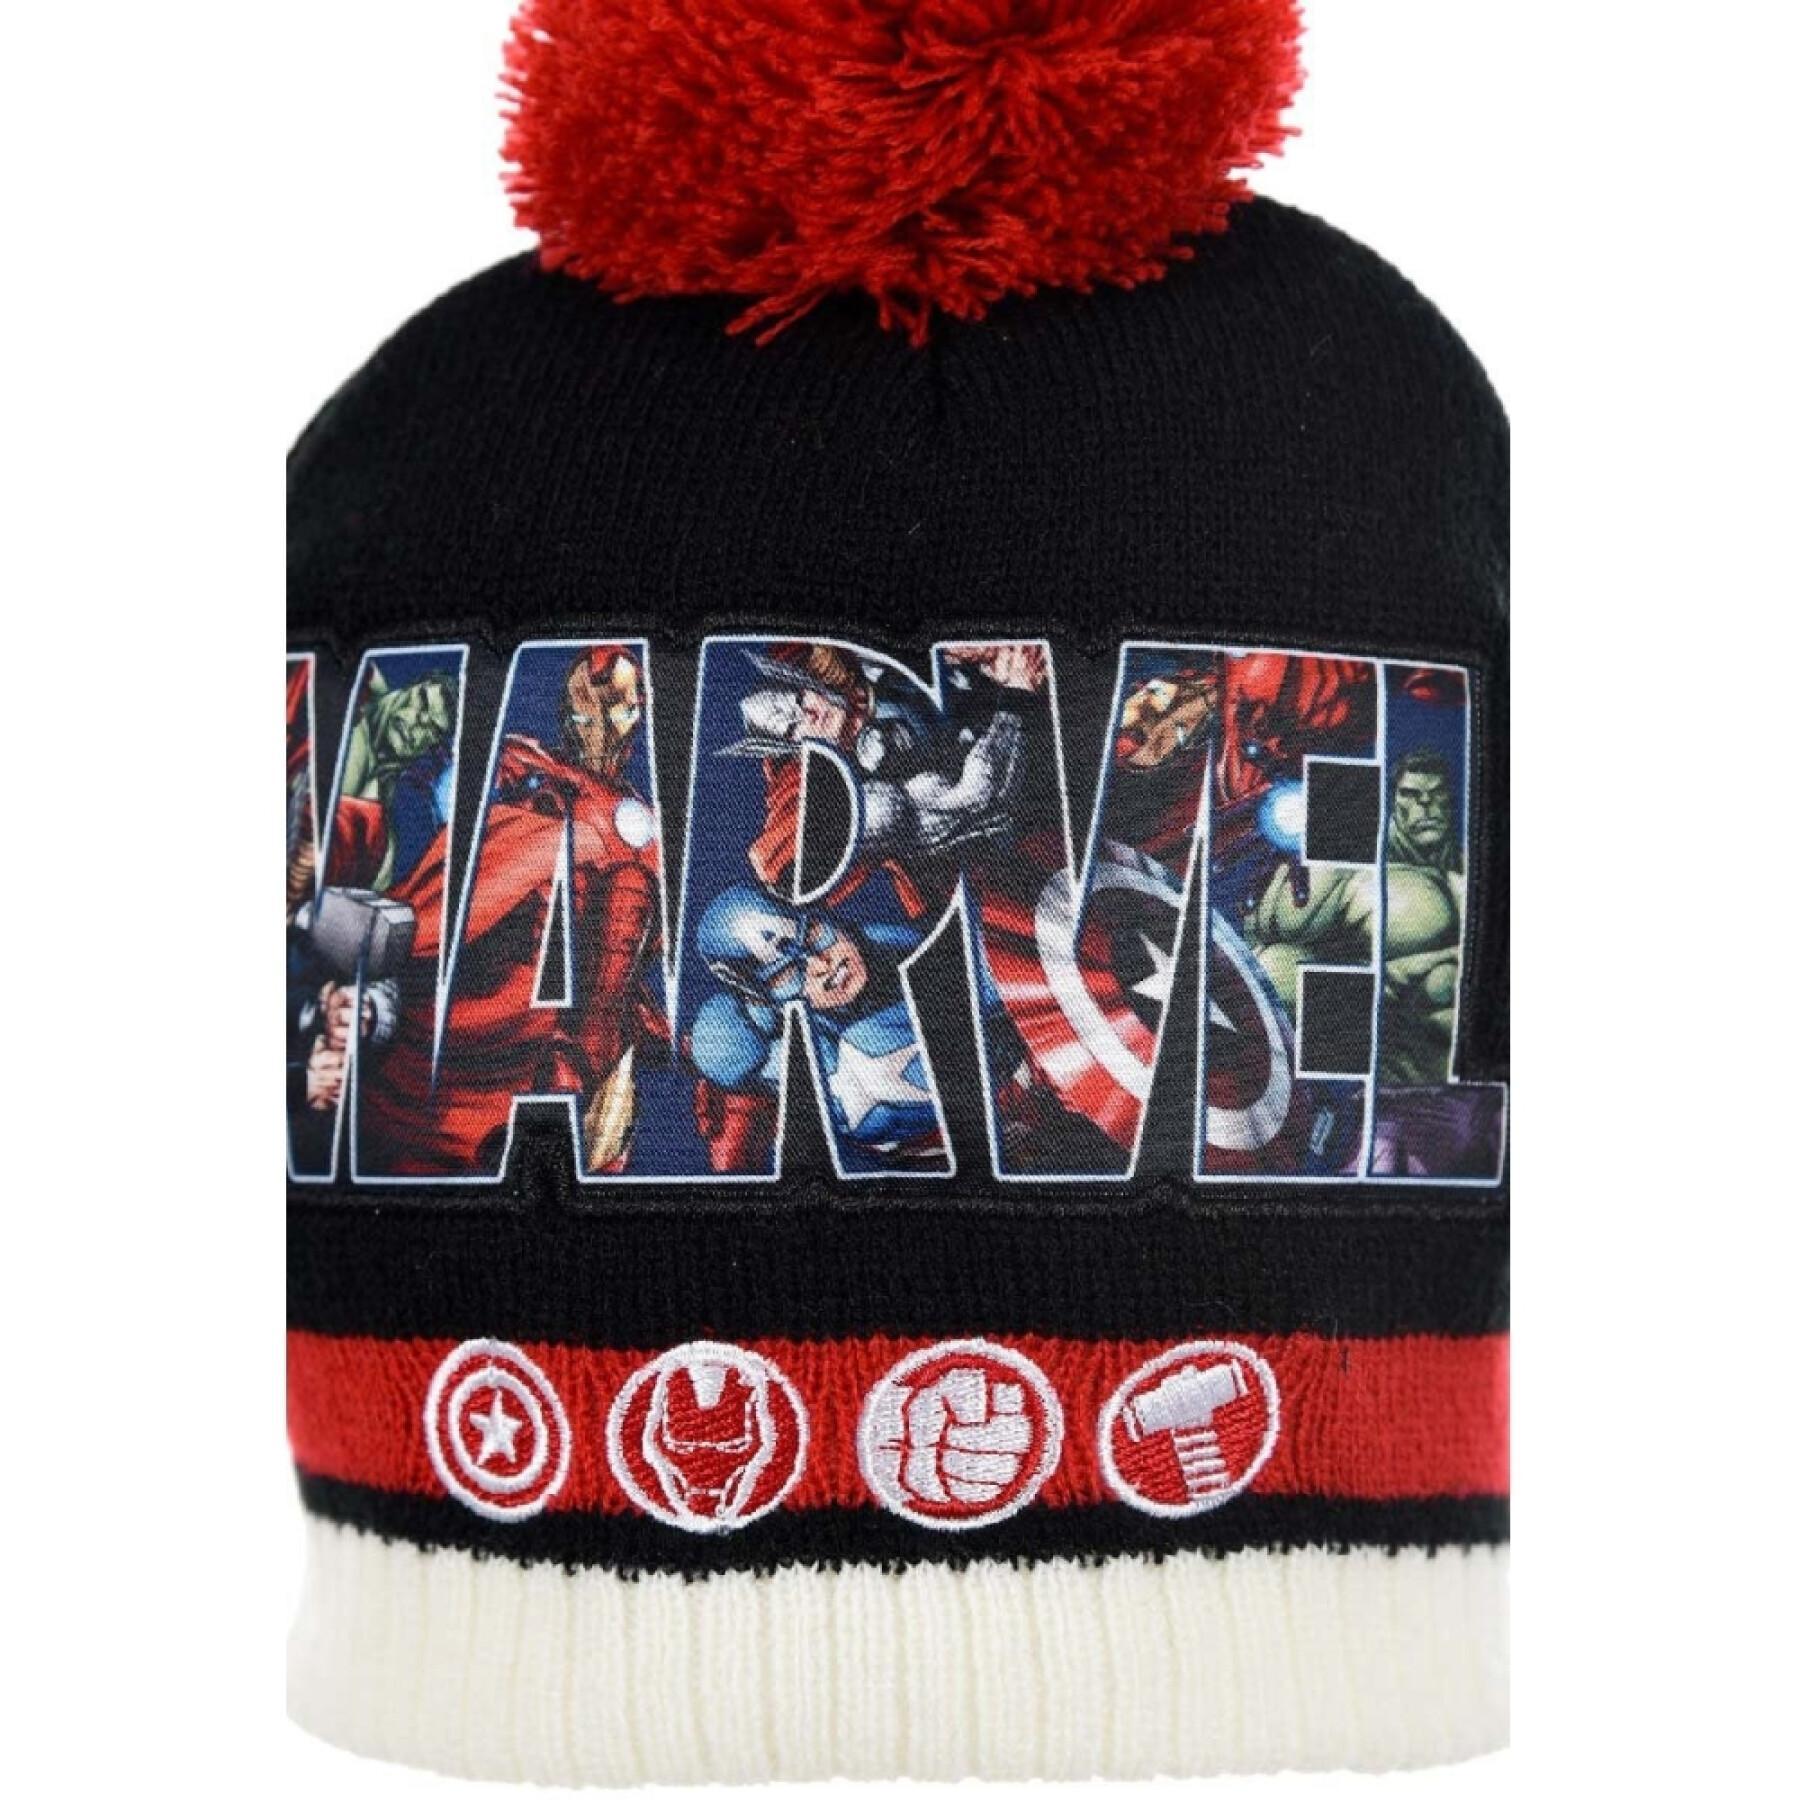 Children's wool and fleece hat and neck warmer set Avengers